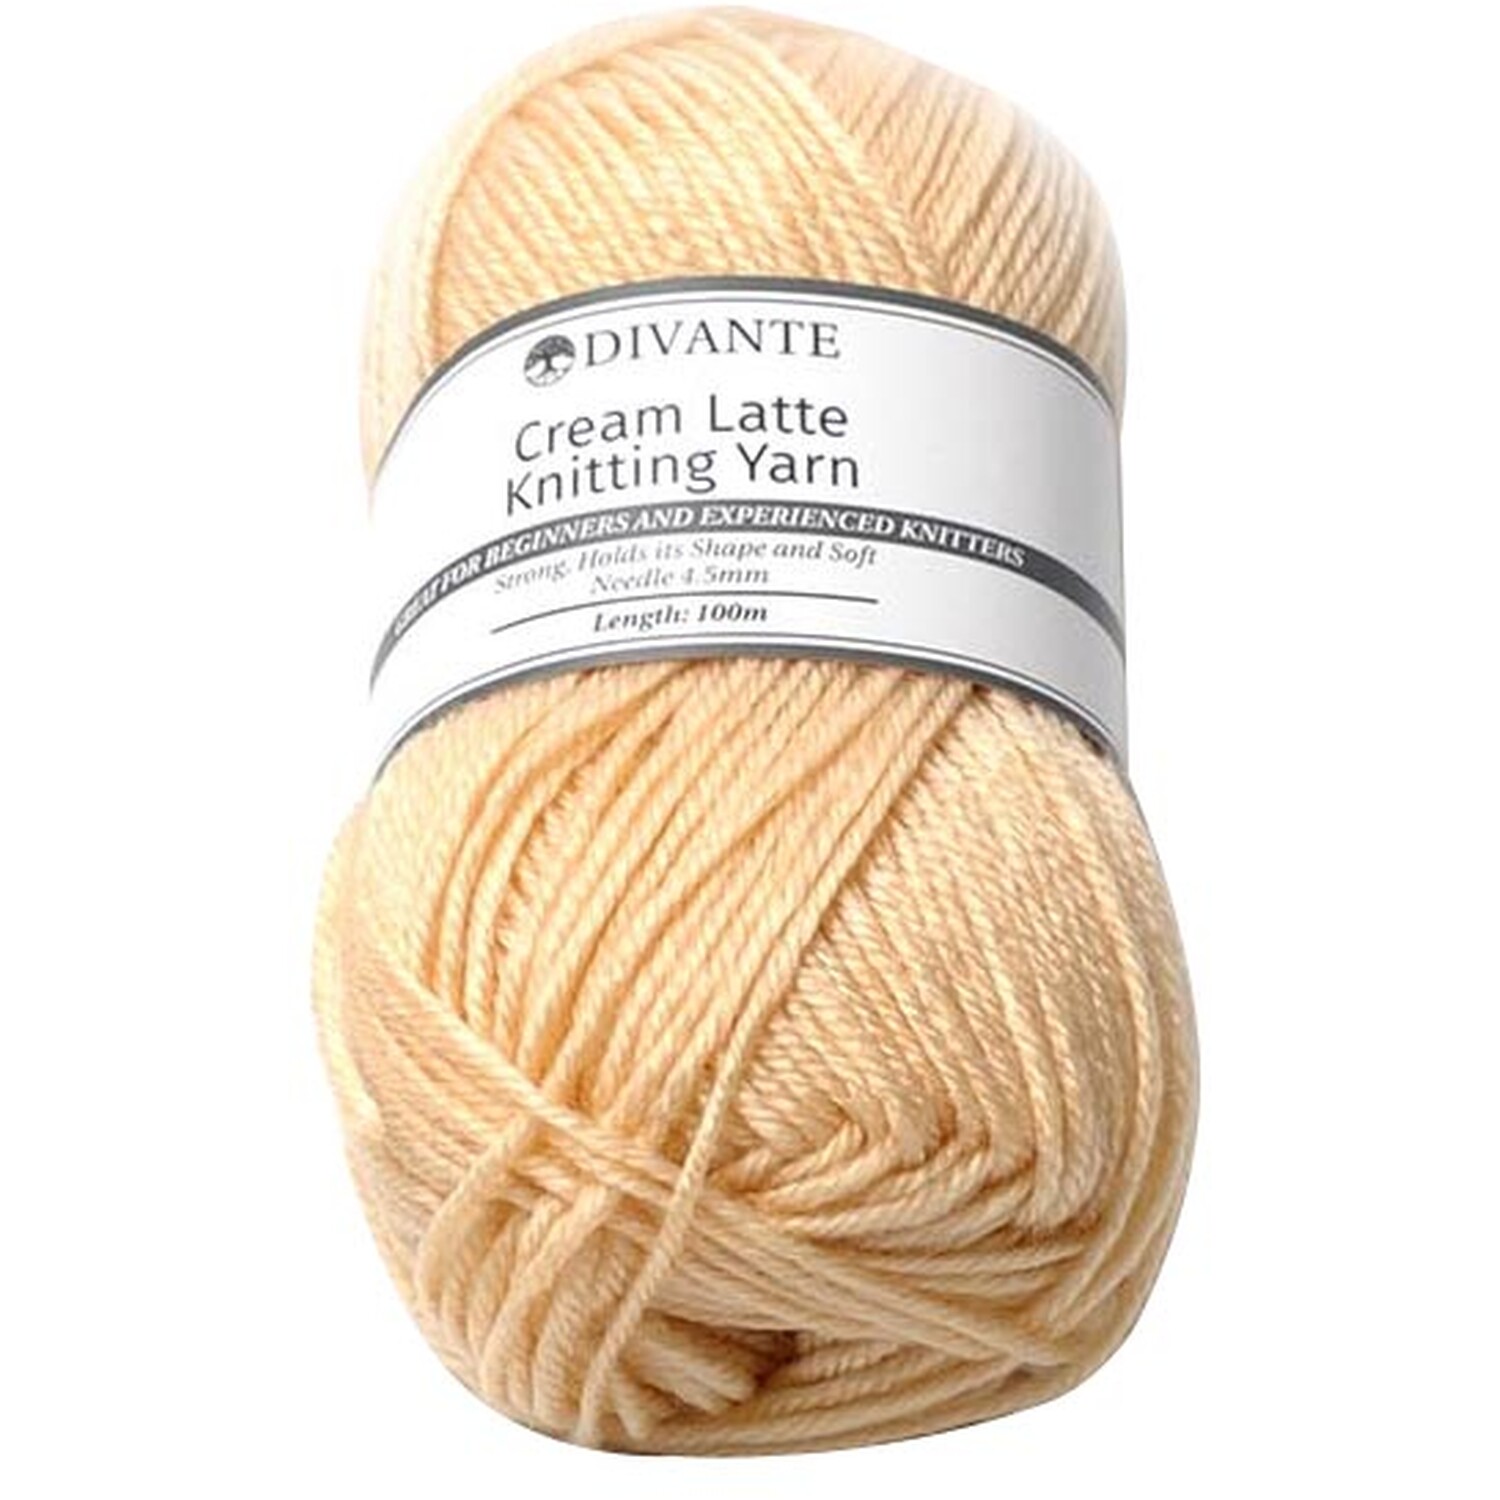 Divante Value Knitting Yarn - Cream Latte Image